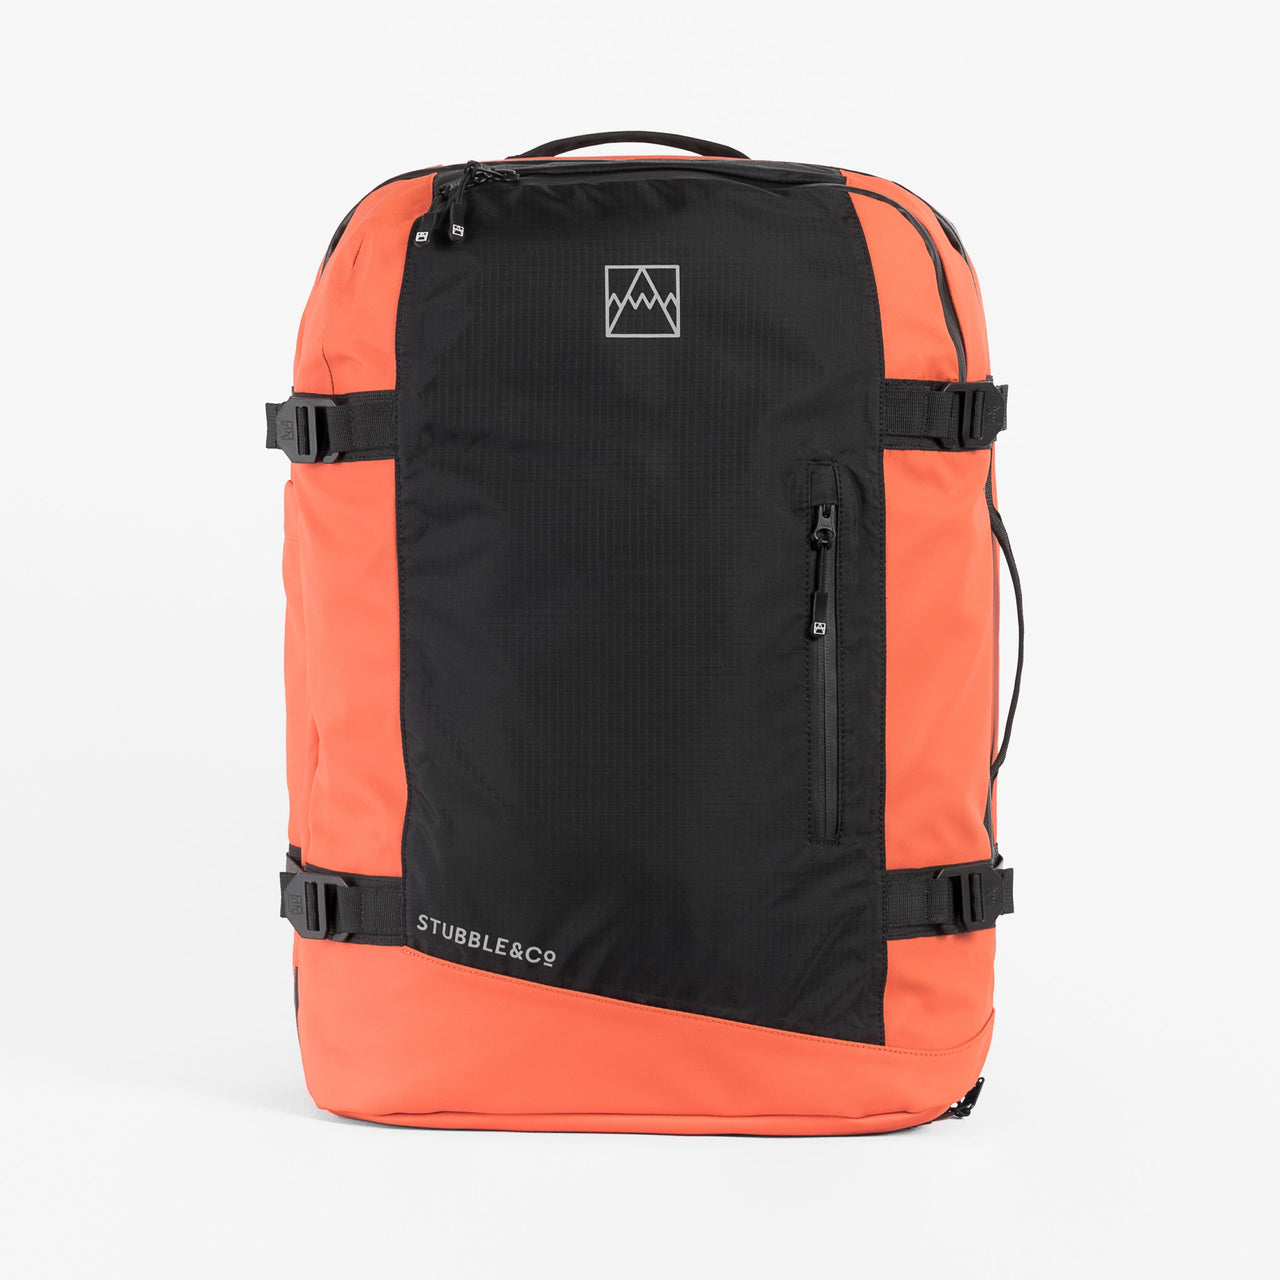 Adventure Bag in Ember Orange front view